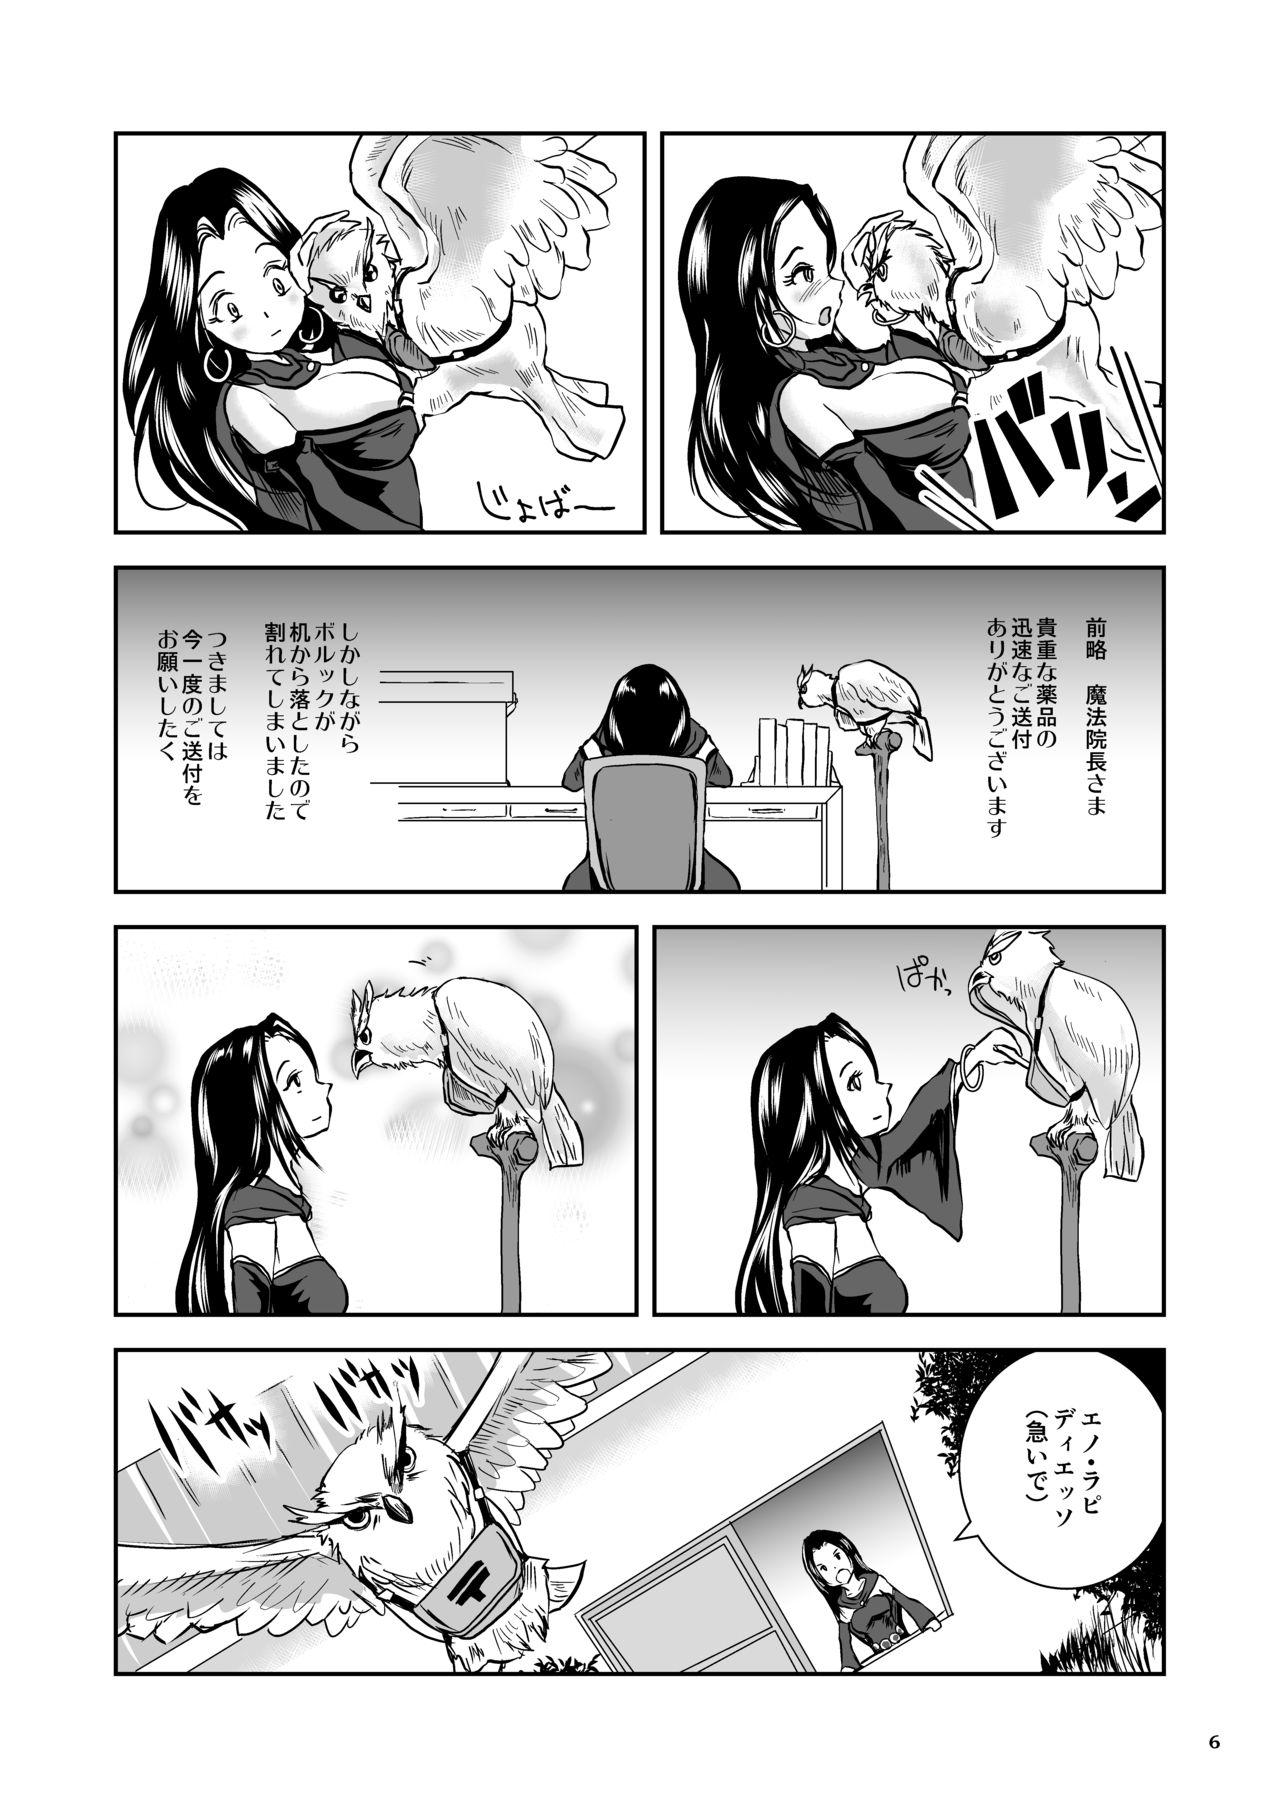 Follada Oonamekuji to Kurokami no Mahoutsukai - Parasitized Giant Slugs V.S. Sorceress of the Black Hair as Aura Leche - Page 6